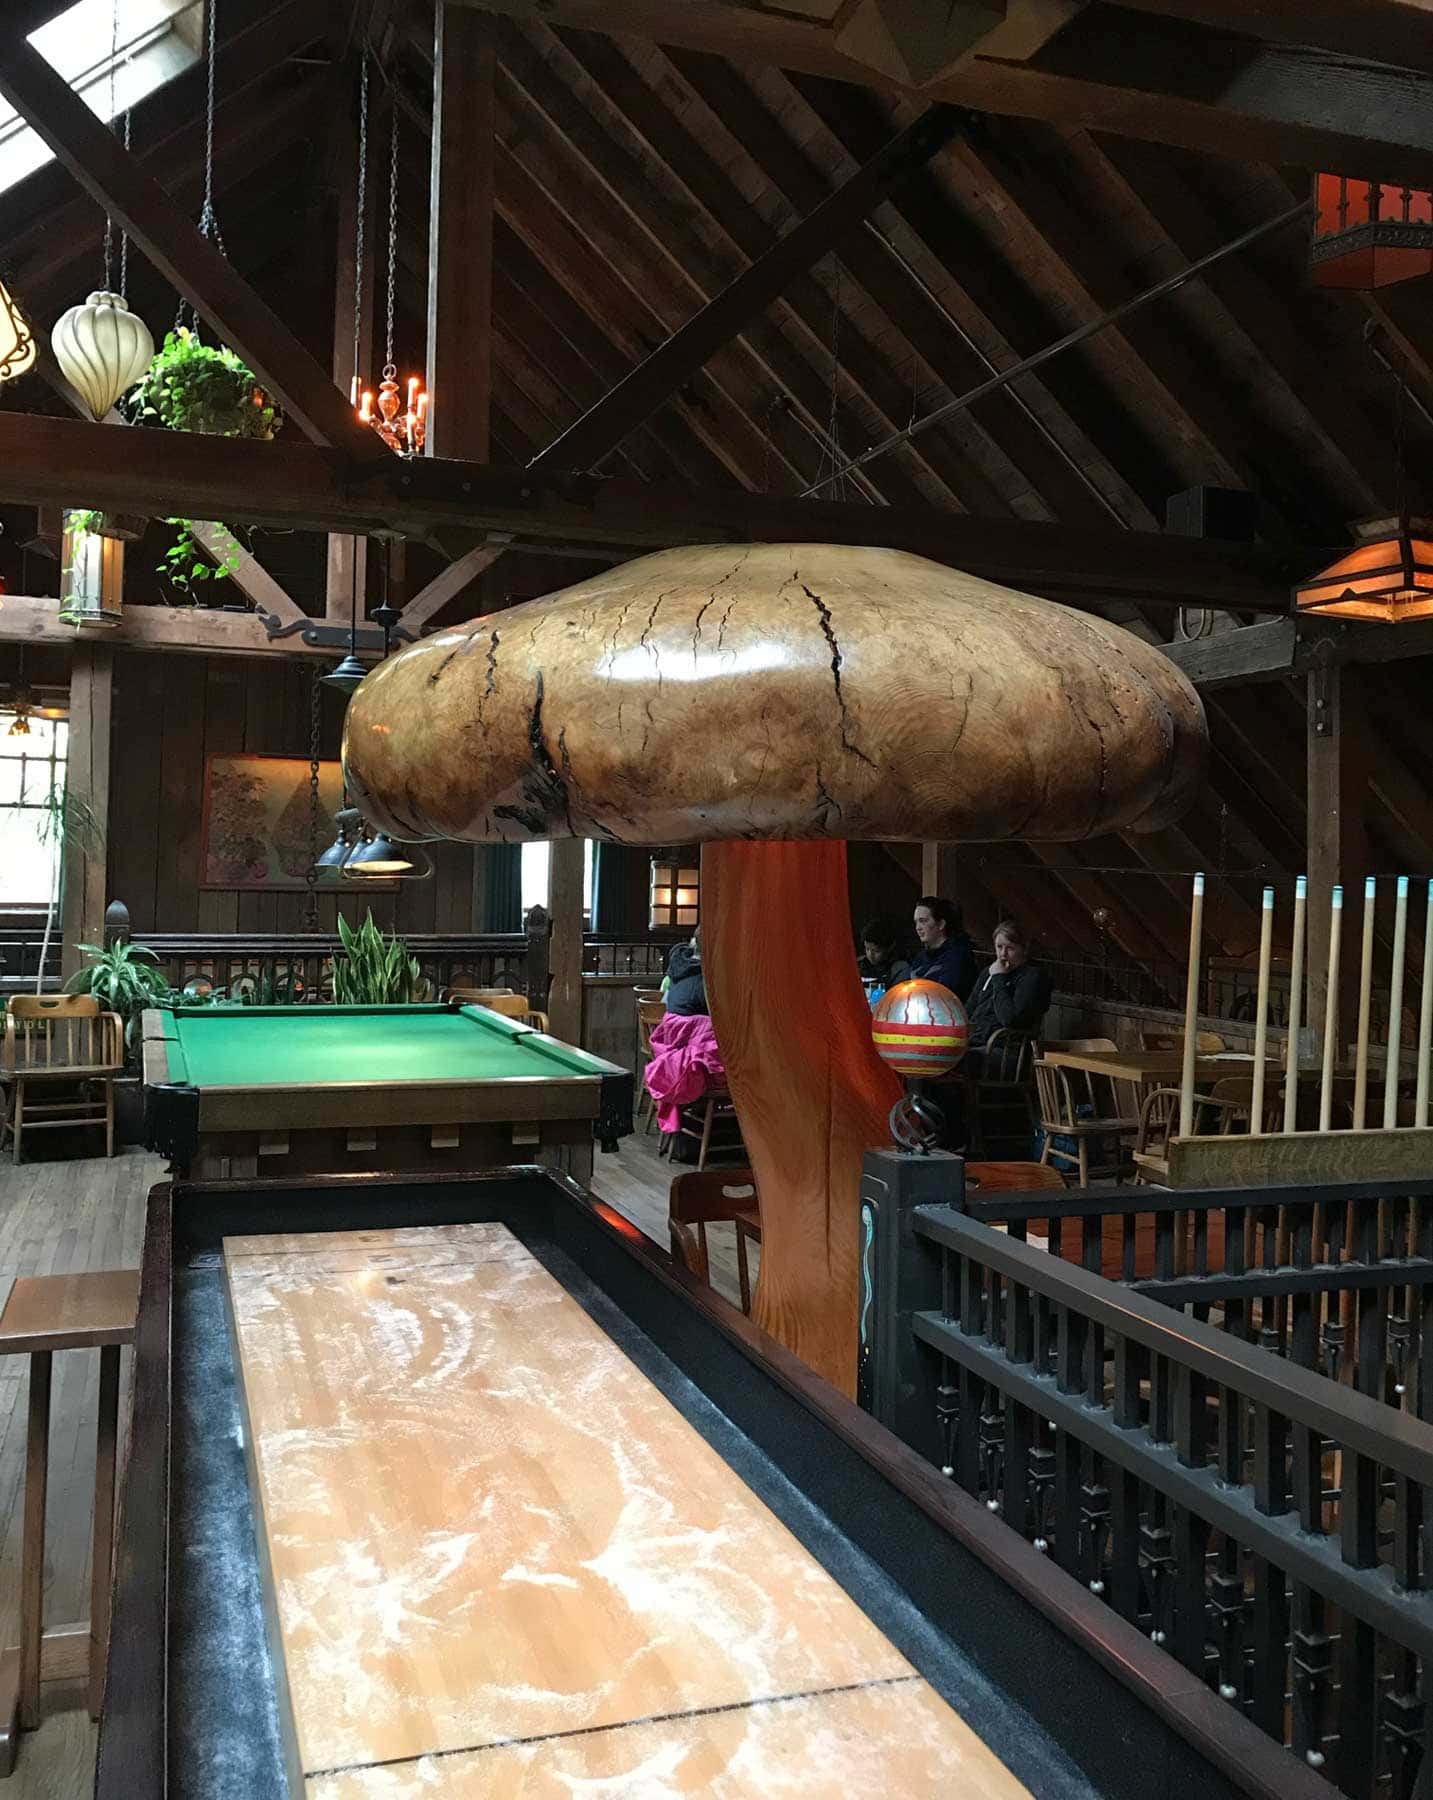 A large mushroom statue leans towards a billiards table.